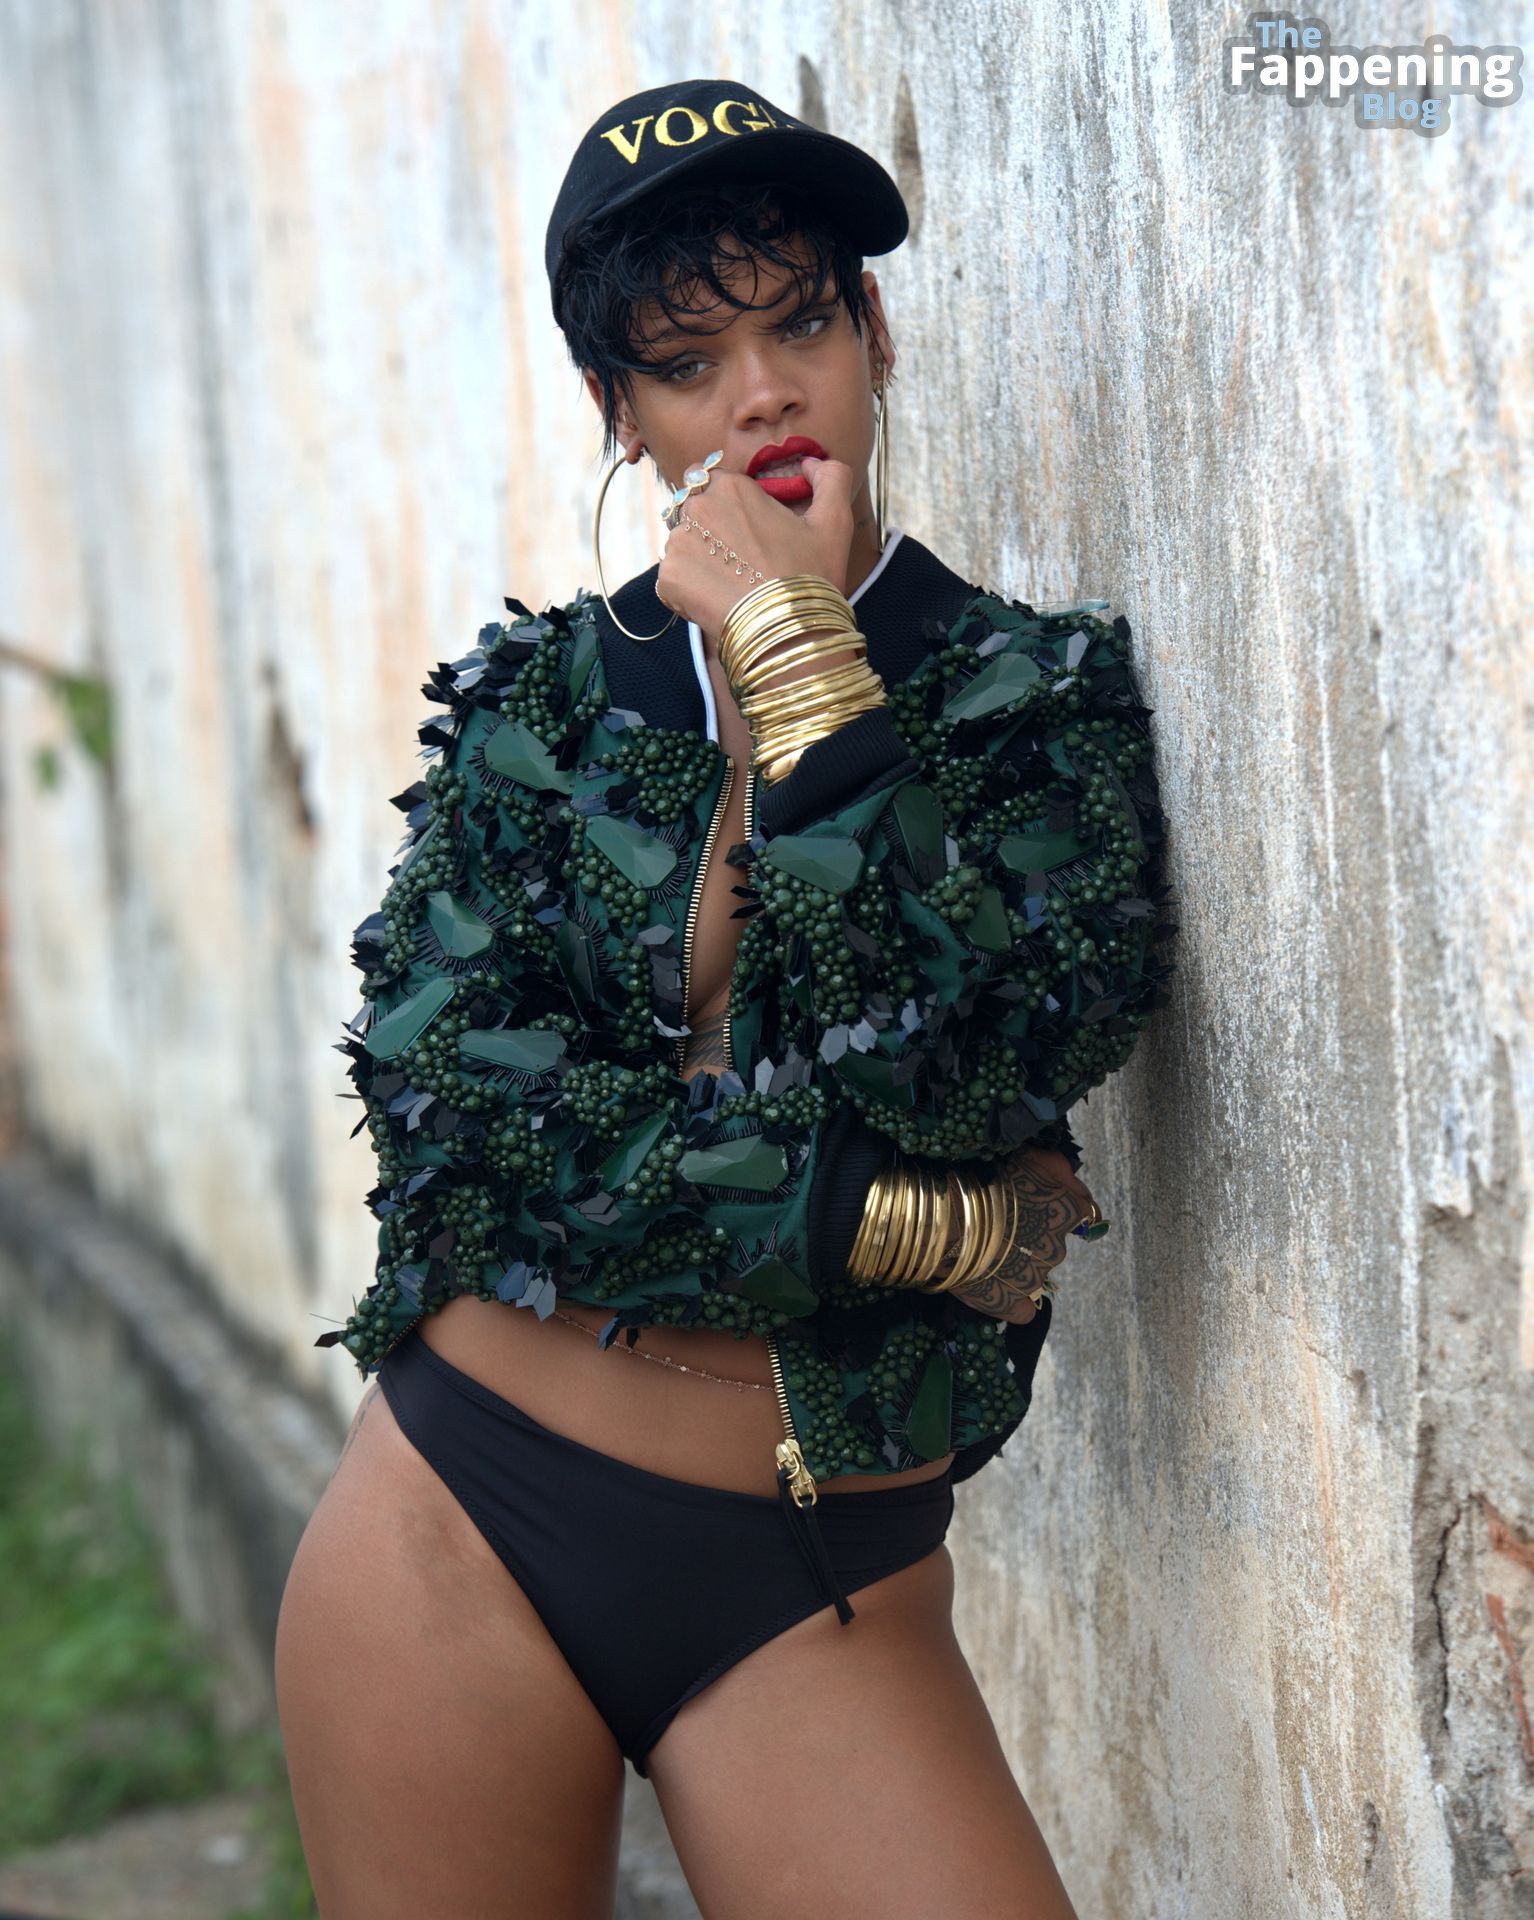 Rihanna-Nude-Sexy-27-The-Fappening-Blog.jpg